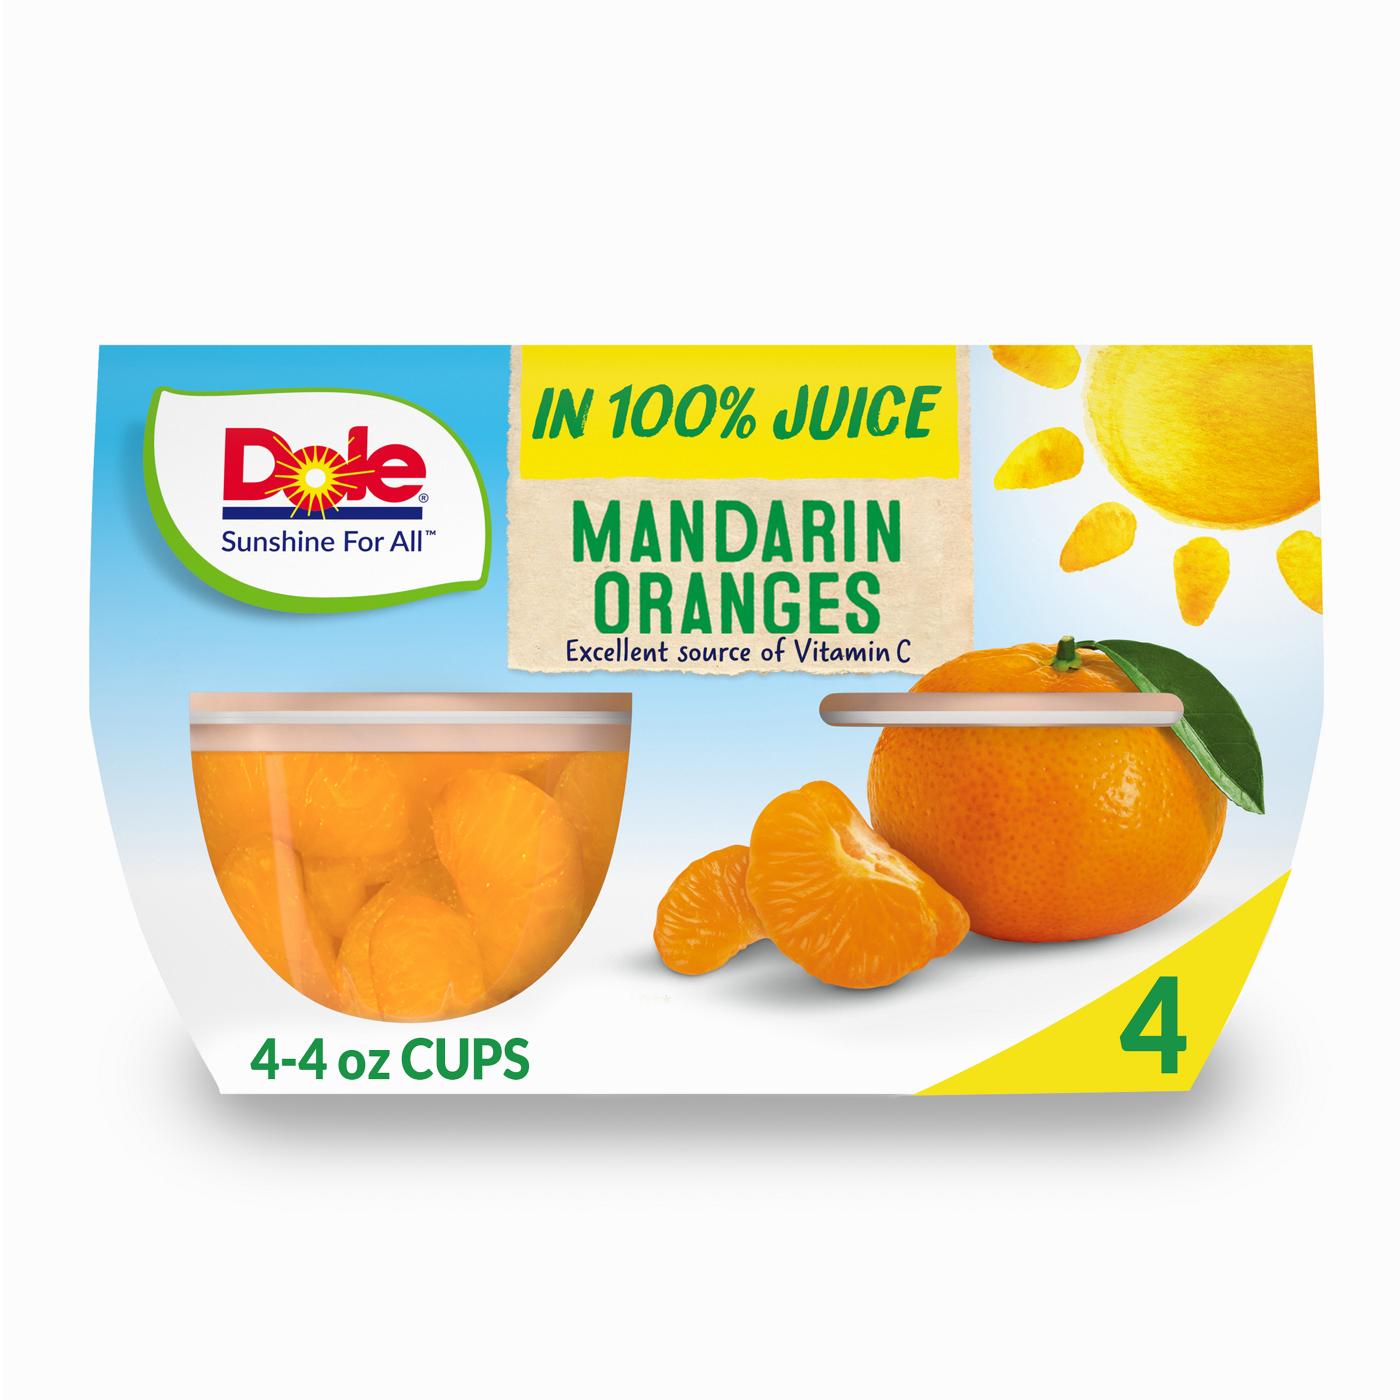 Dole Fruit Bowls - Mandarin Oranges in 100% Juice; image 1 of 5